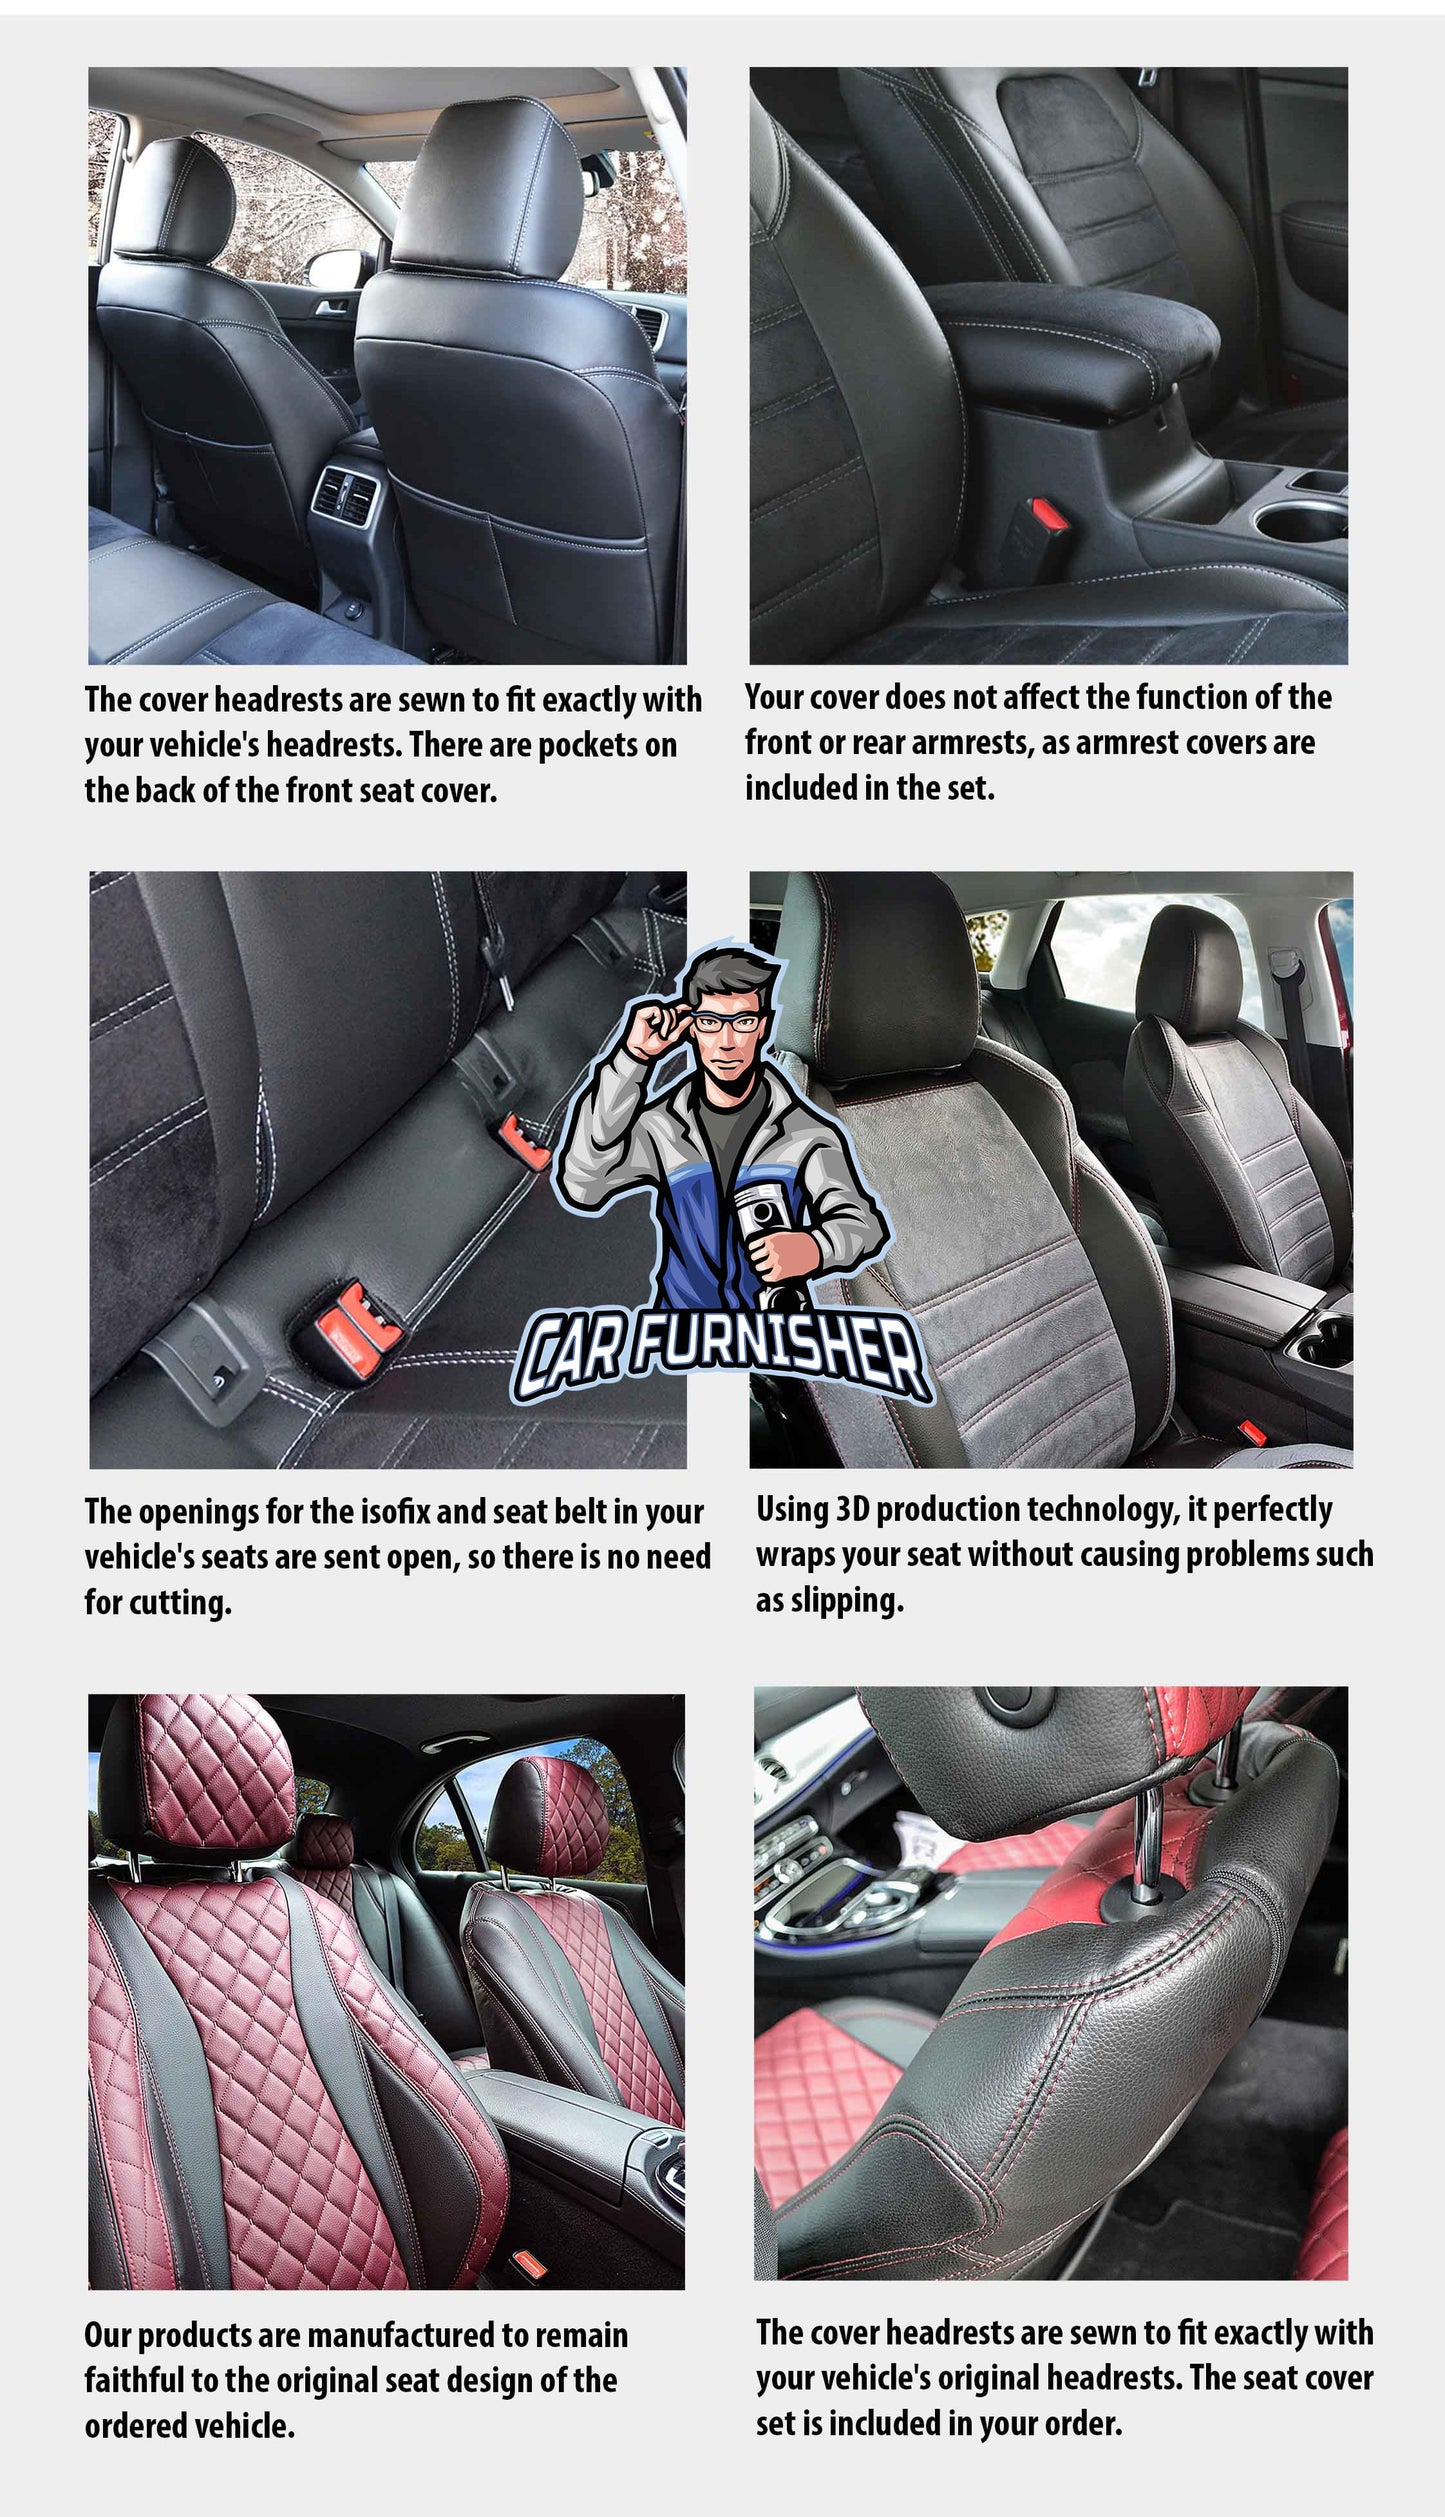 Mercedes Citan Seat Covers Paris Leather & Jacquard Design Red Leather & Jacquard Fabric